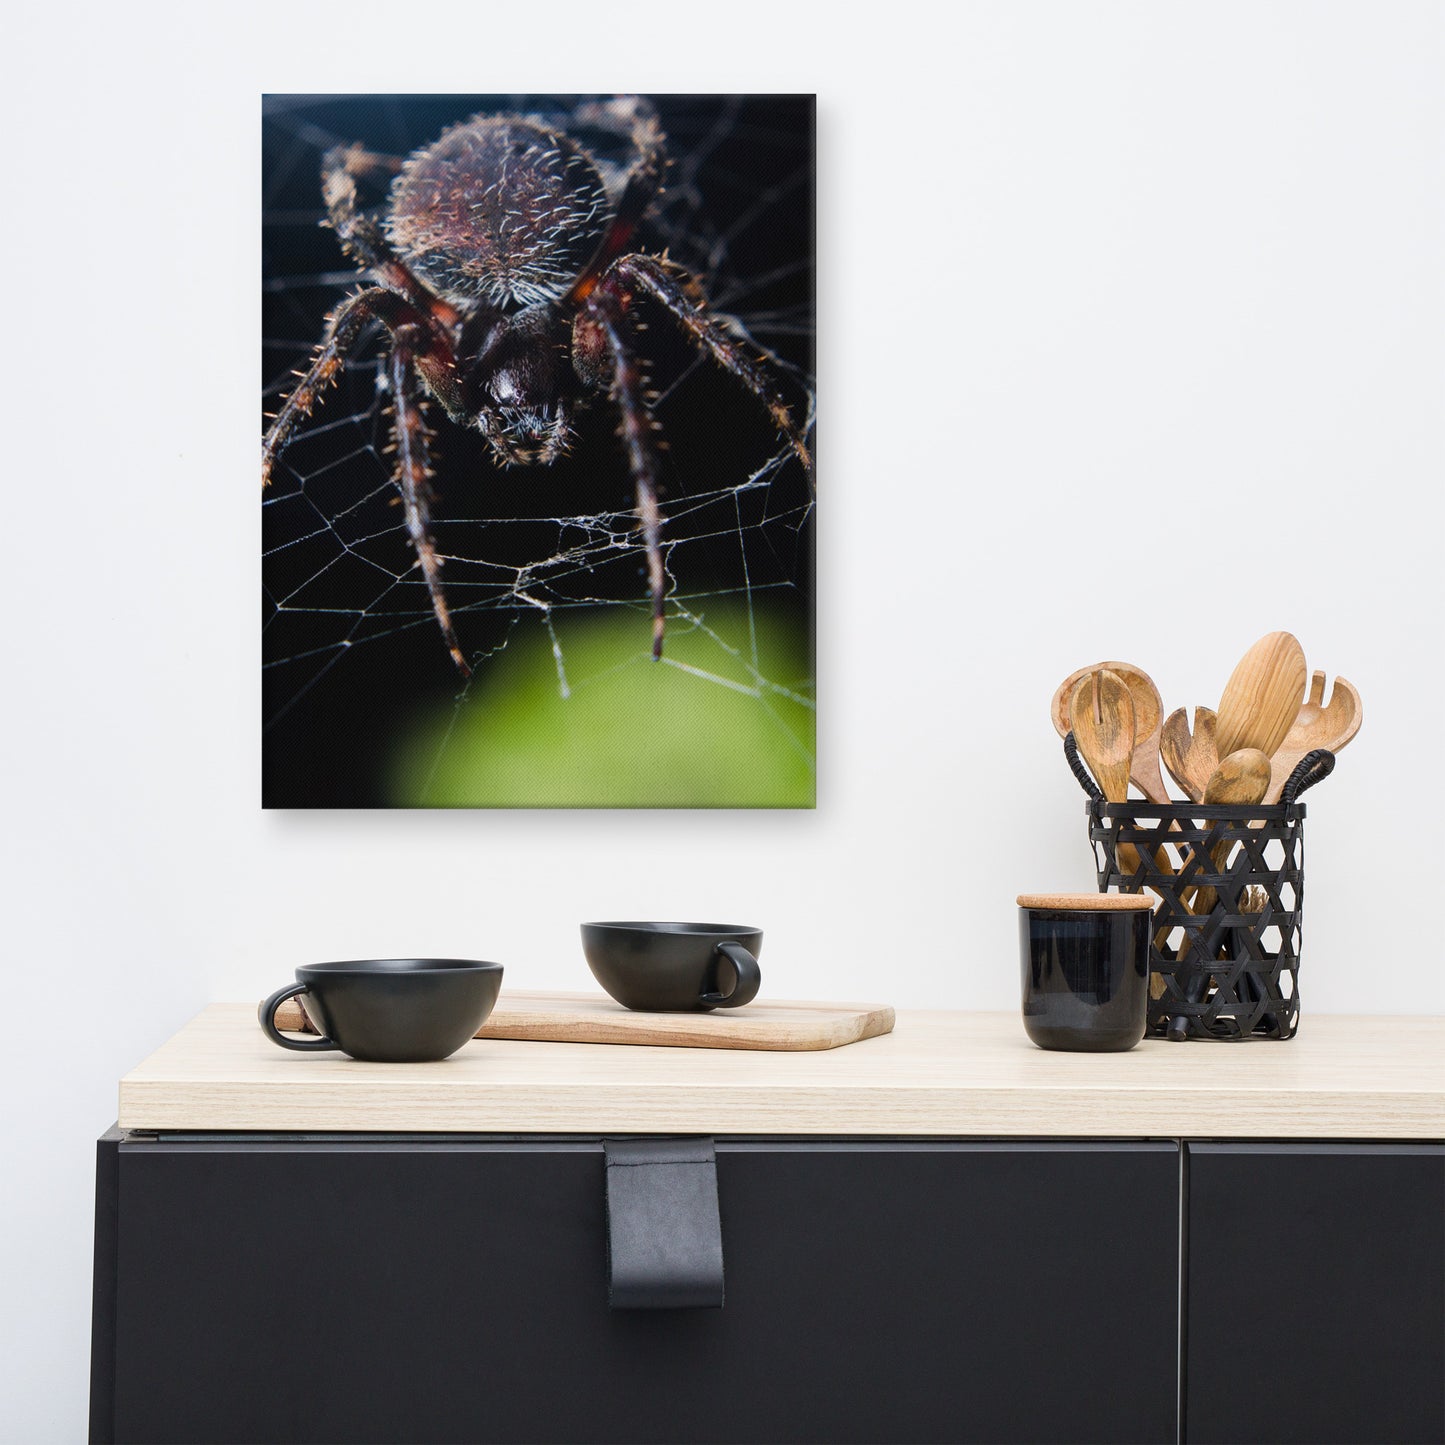 Backyard Buddy Canvas Animal / Insect / Wildlife Photo Wall Art Print